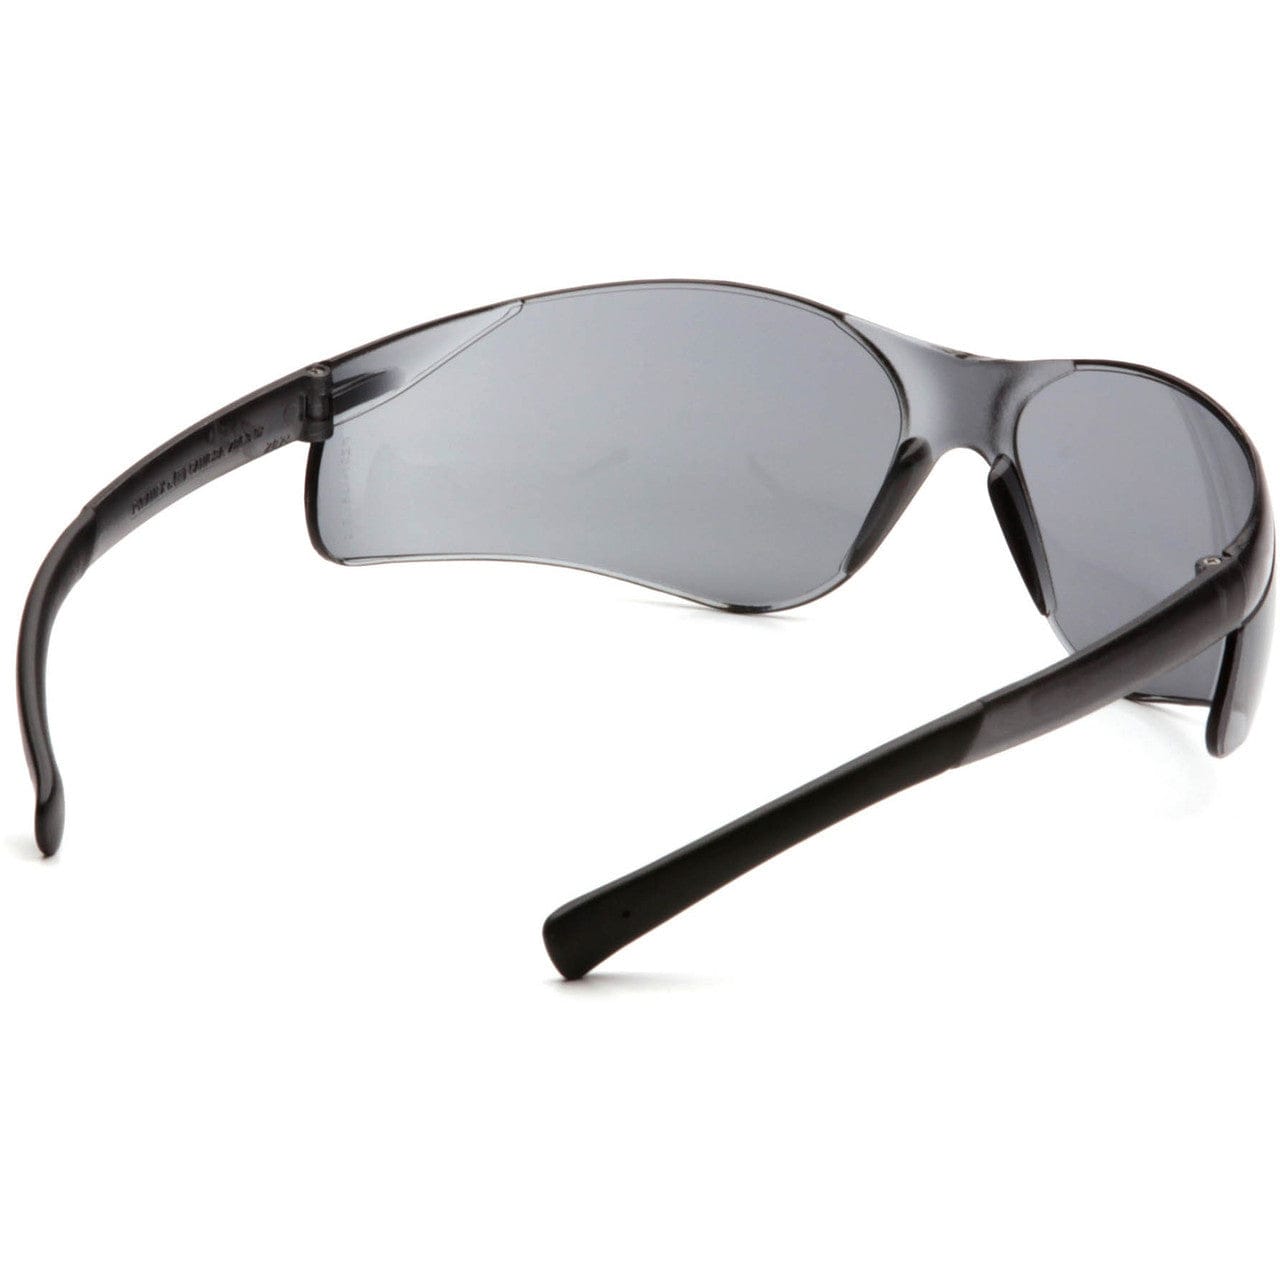 Pyramex Ztek Safety Glasses with Gray Anti-Fog Lens S2520ST Inside View